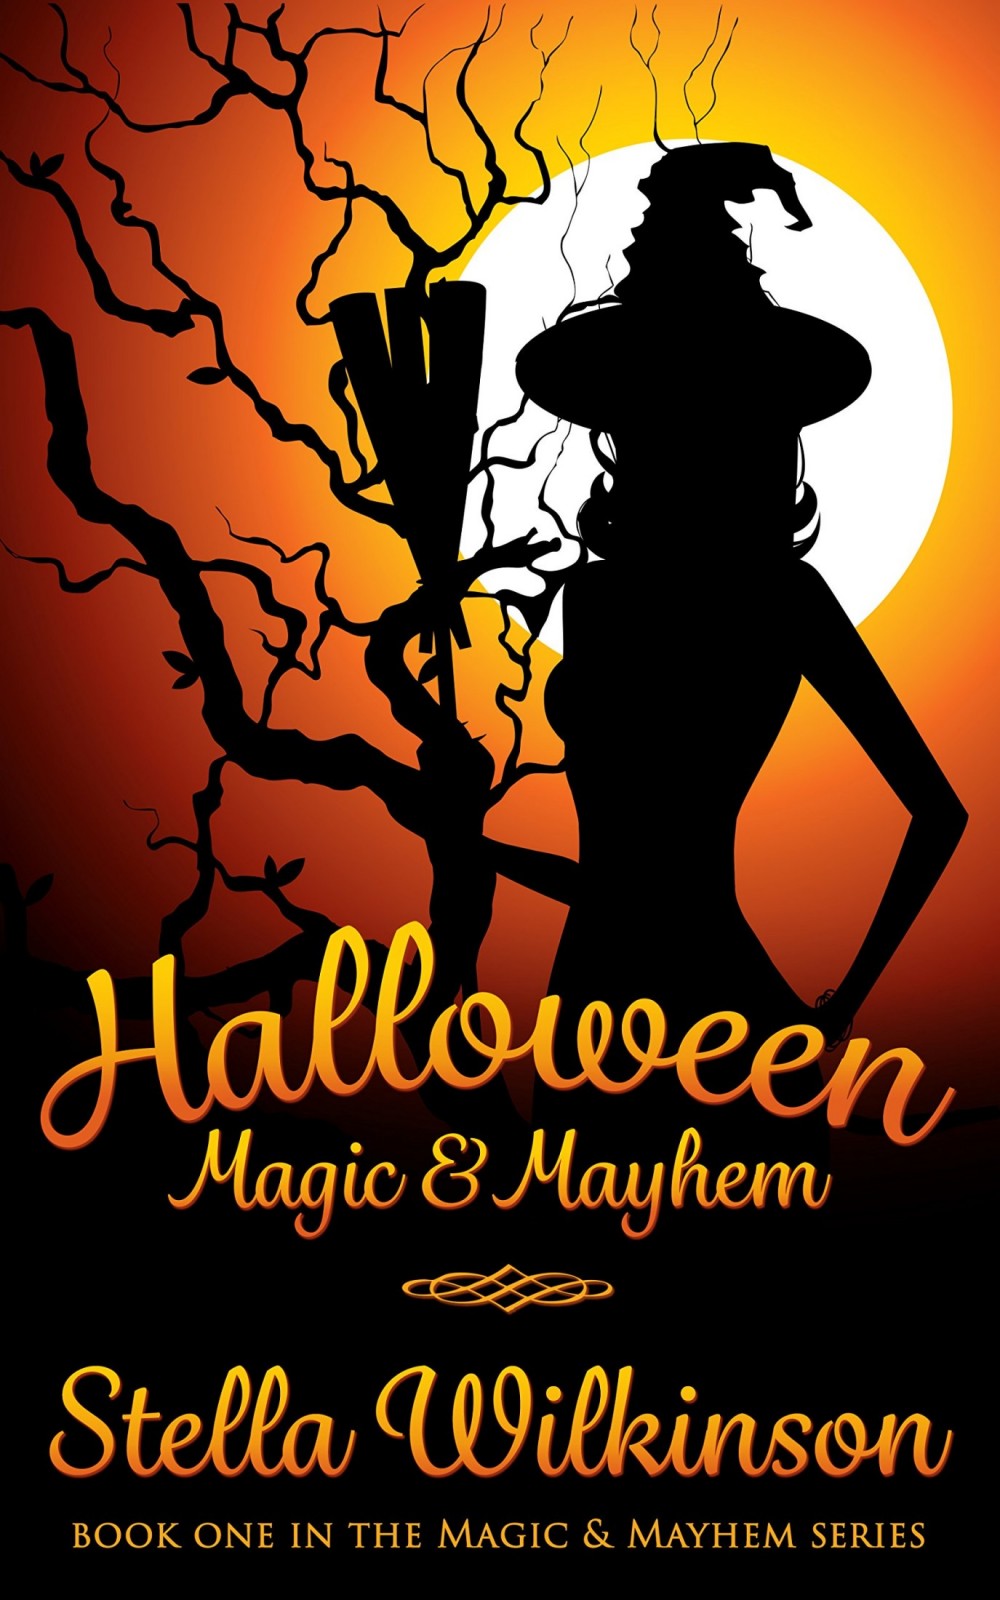 Halloween Magic & Mayhem